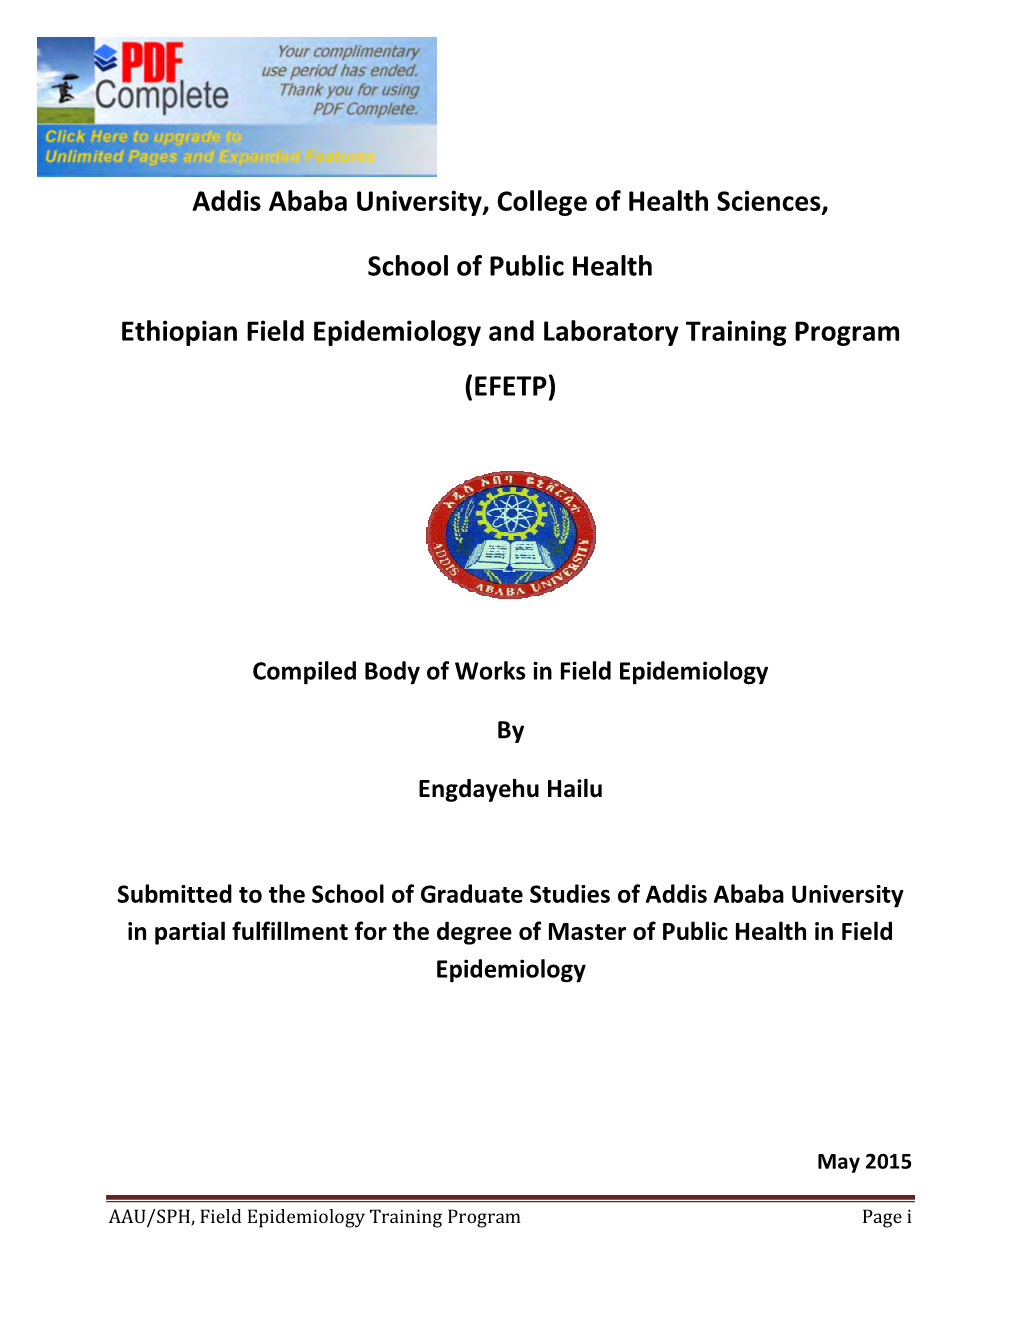 Addis Ababa University, College of Health Sciences, School of Public